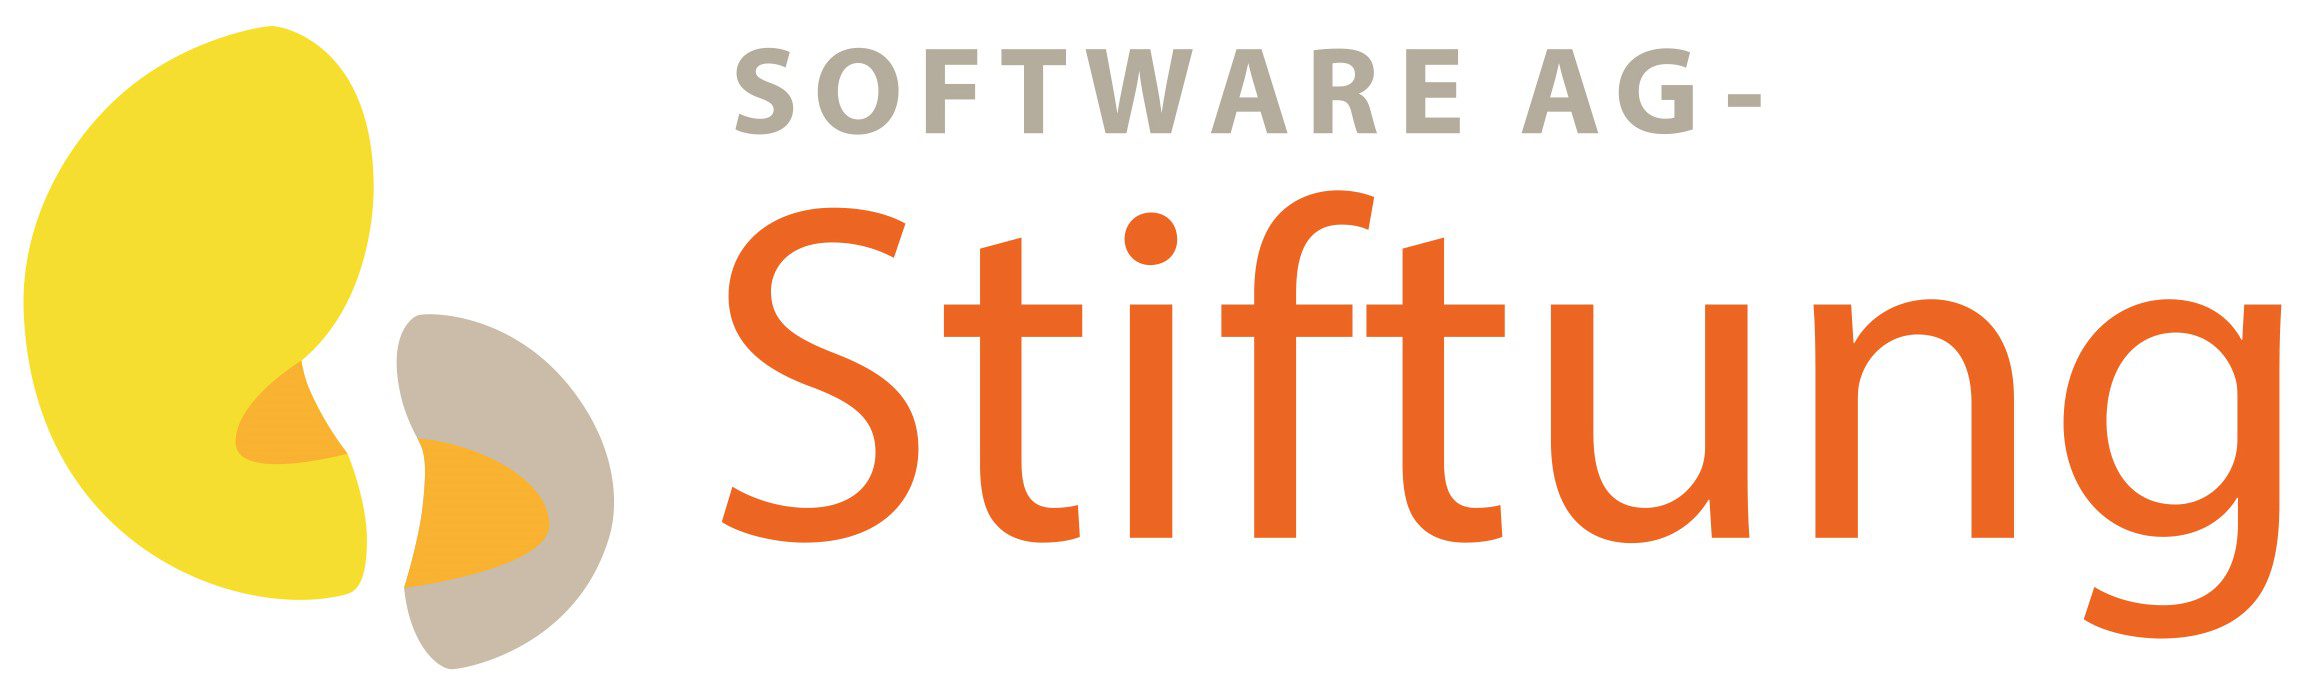 Software AG Stiftung Logo